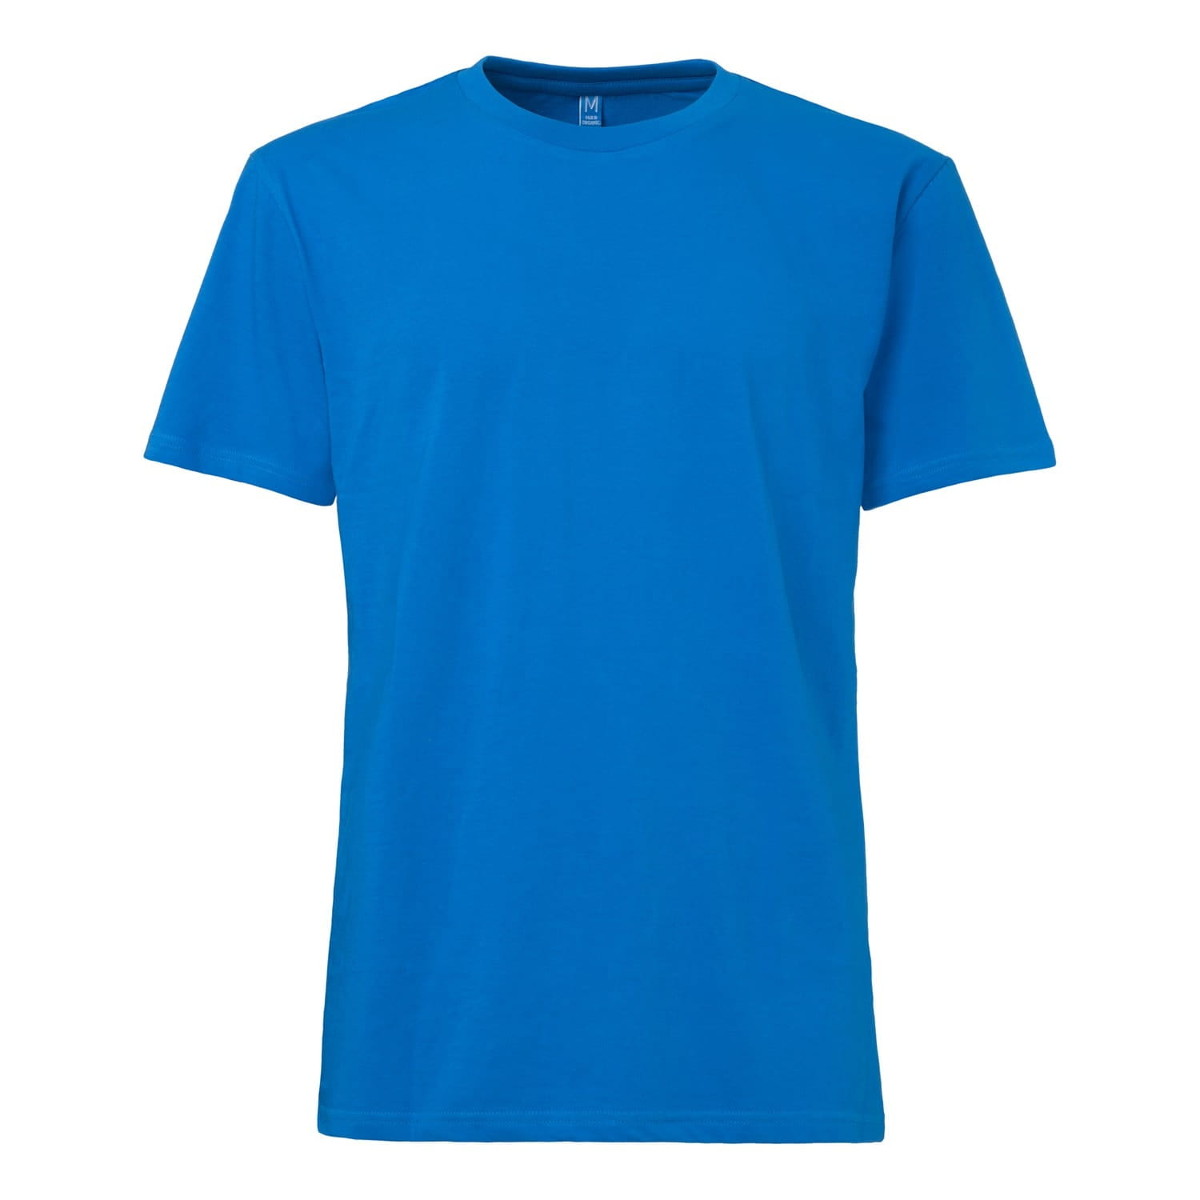 Denso Persona responsabile aggiunta blue shirts Puntura assistente